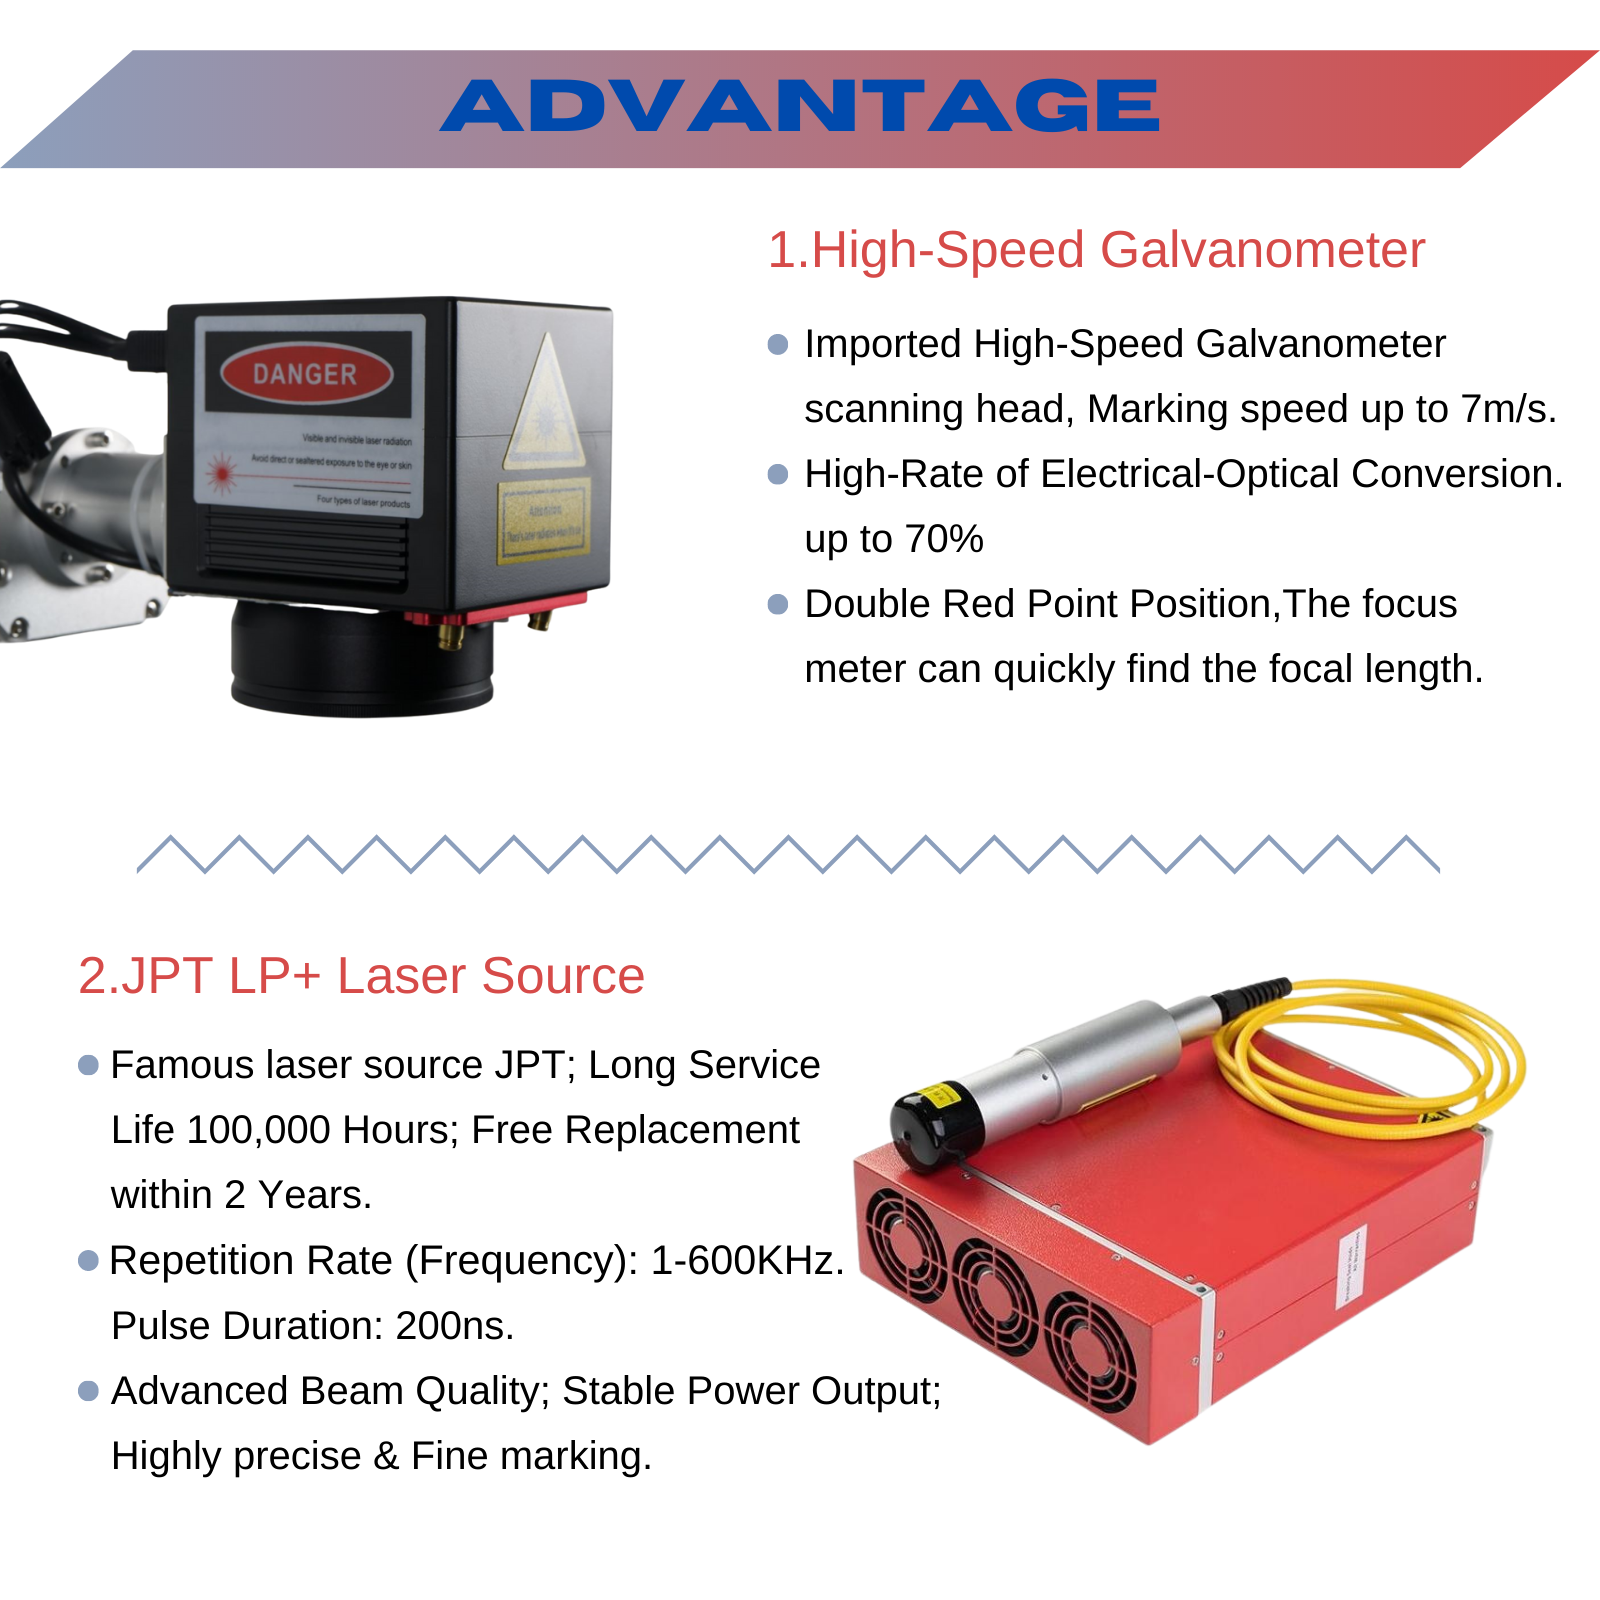 JPT Fiber Laser Engraver Marking Machine